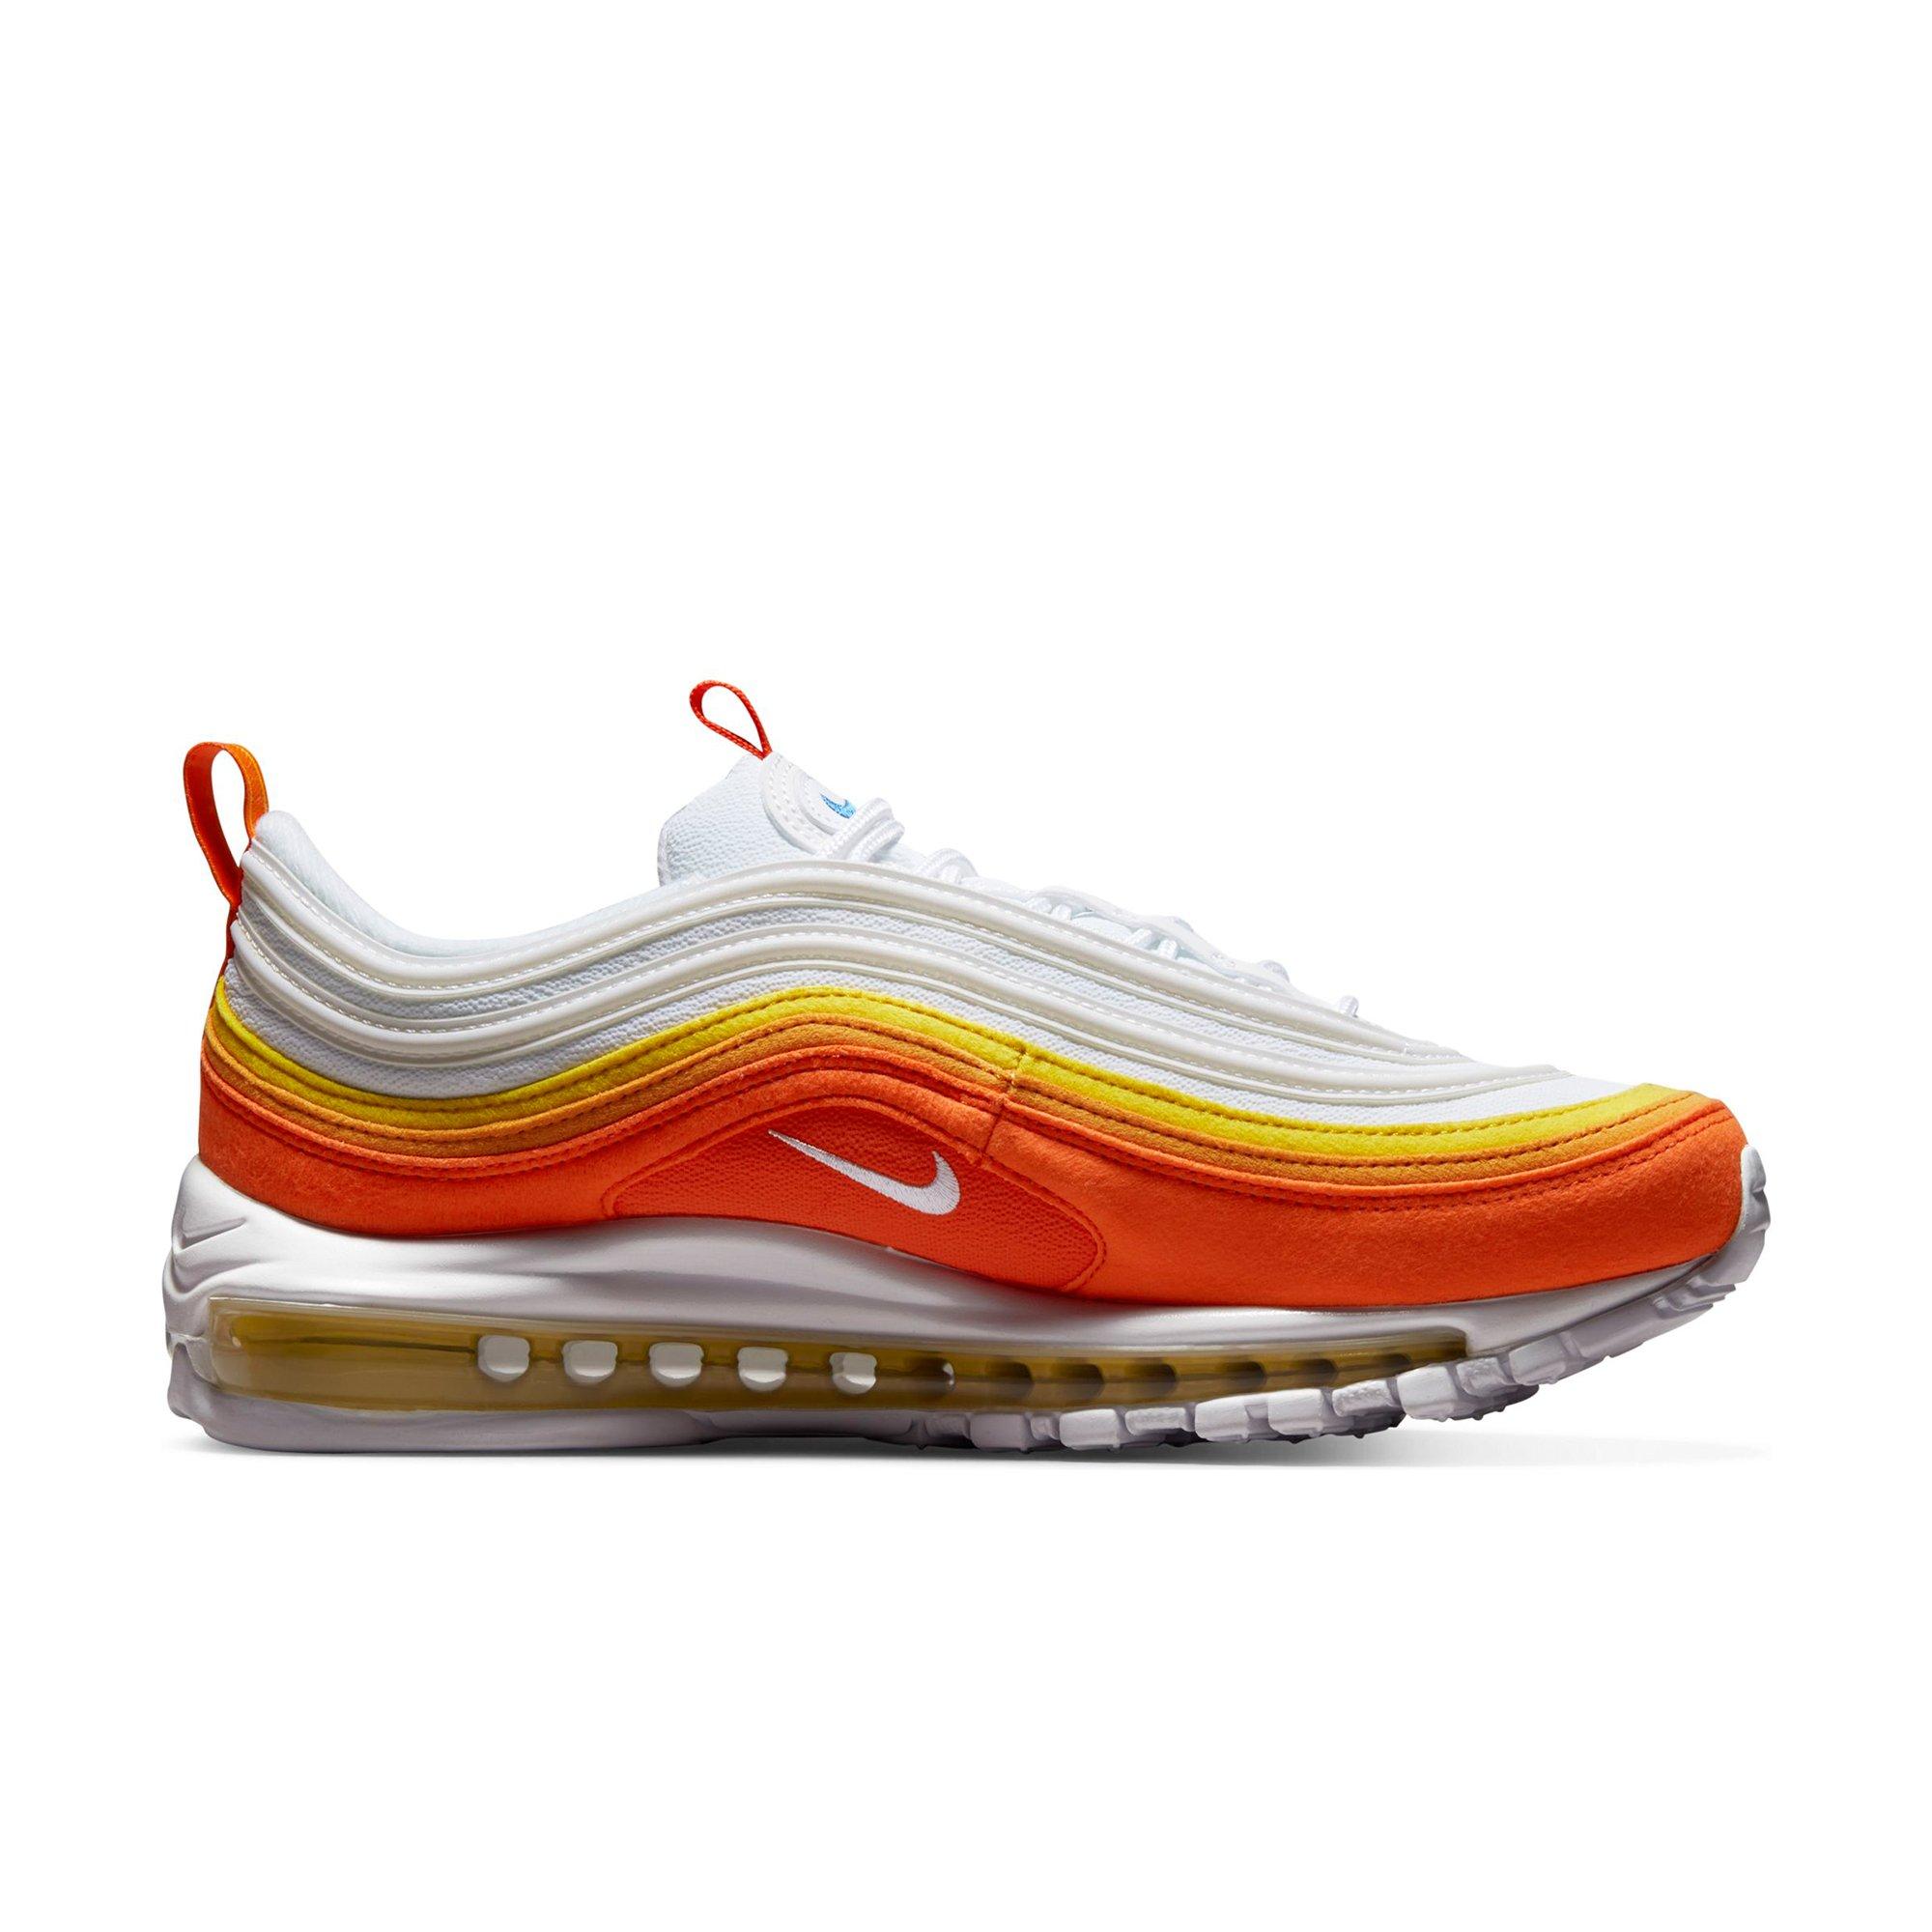 Nike Max 97 "Rush Orange/White/Vivid Sulfur" Men's Shoe